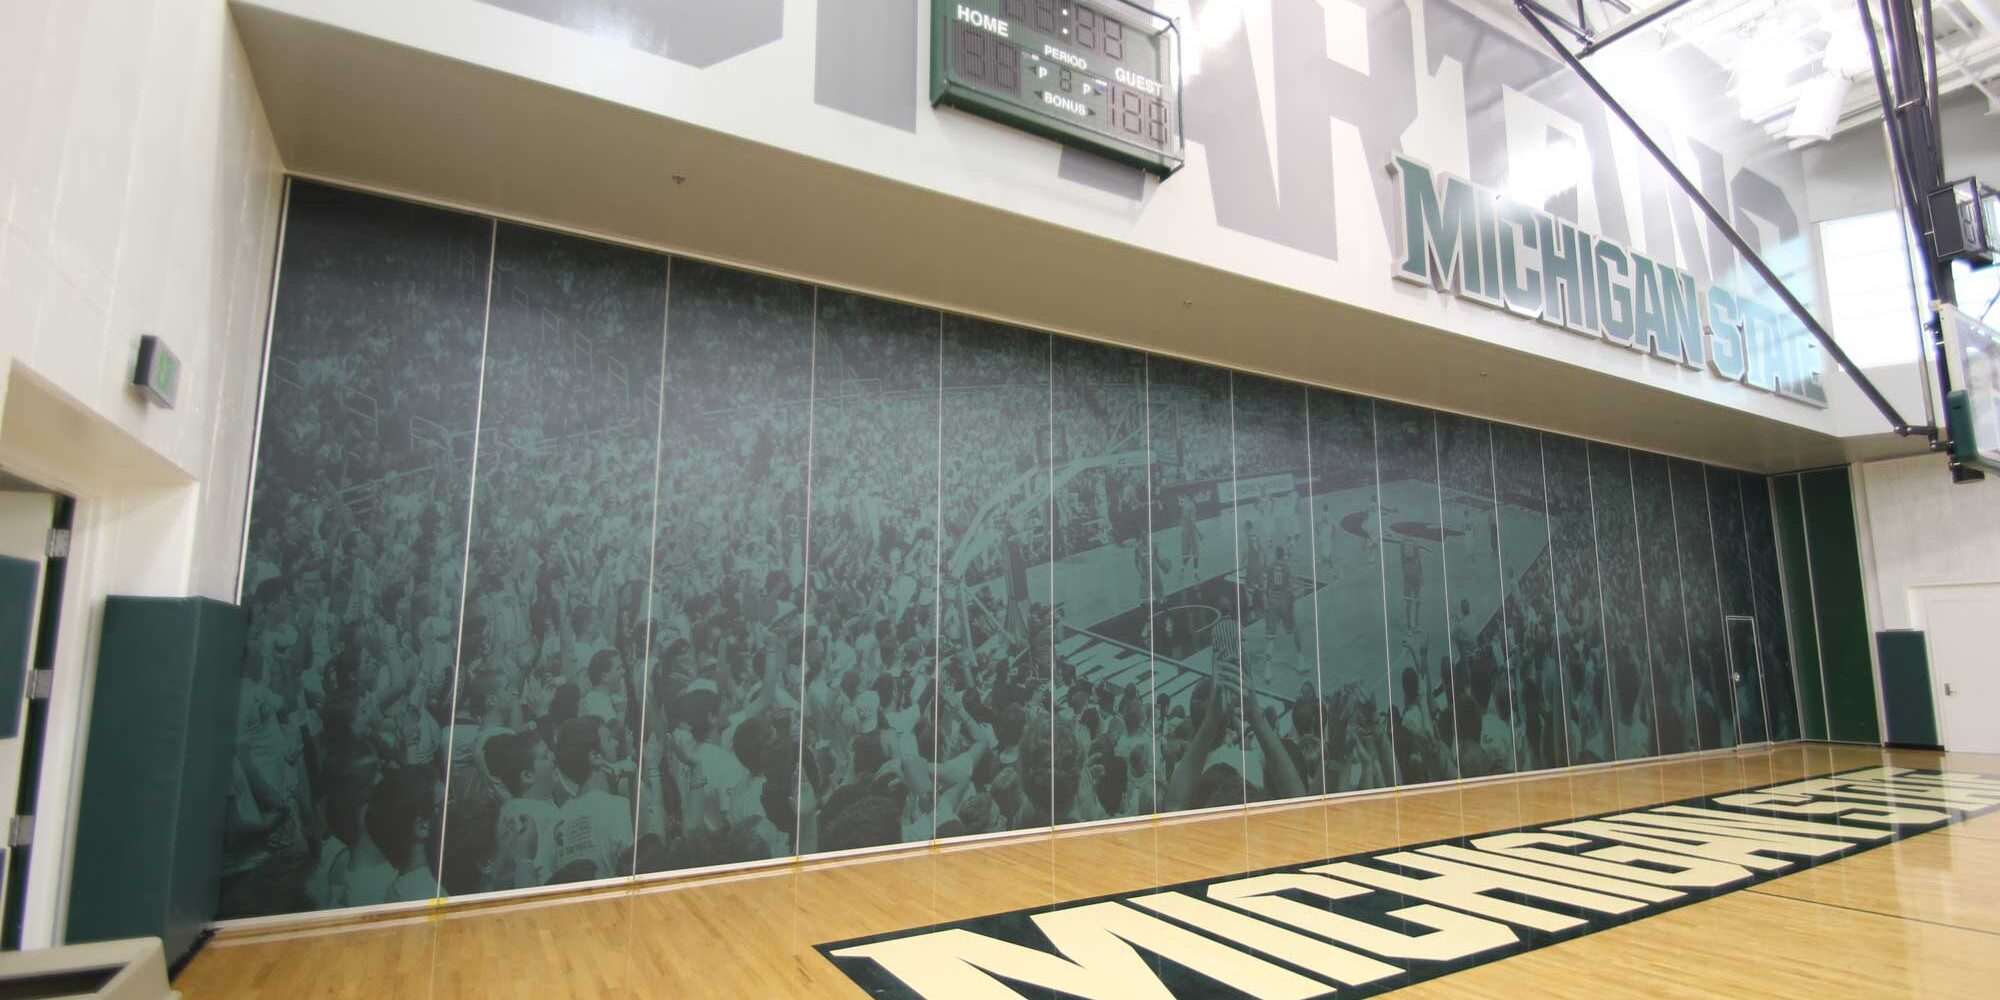 wall graphic displaying basketball game at Michigan State University